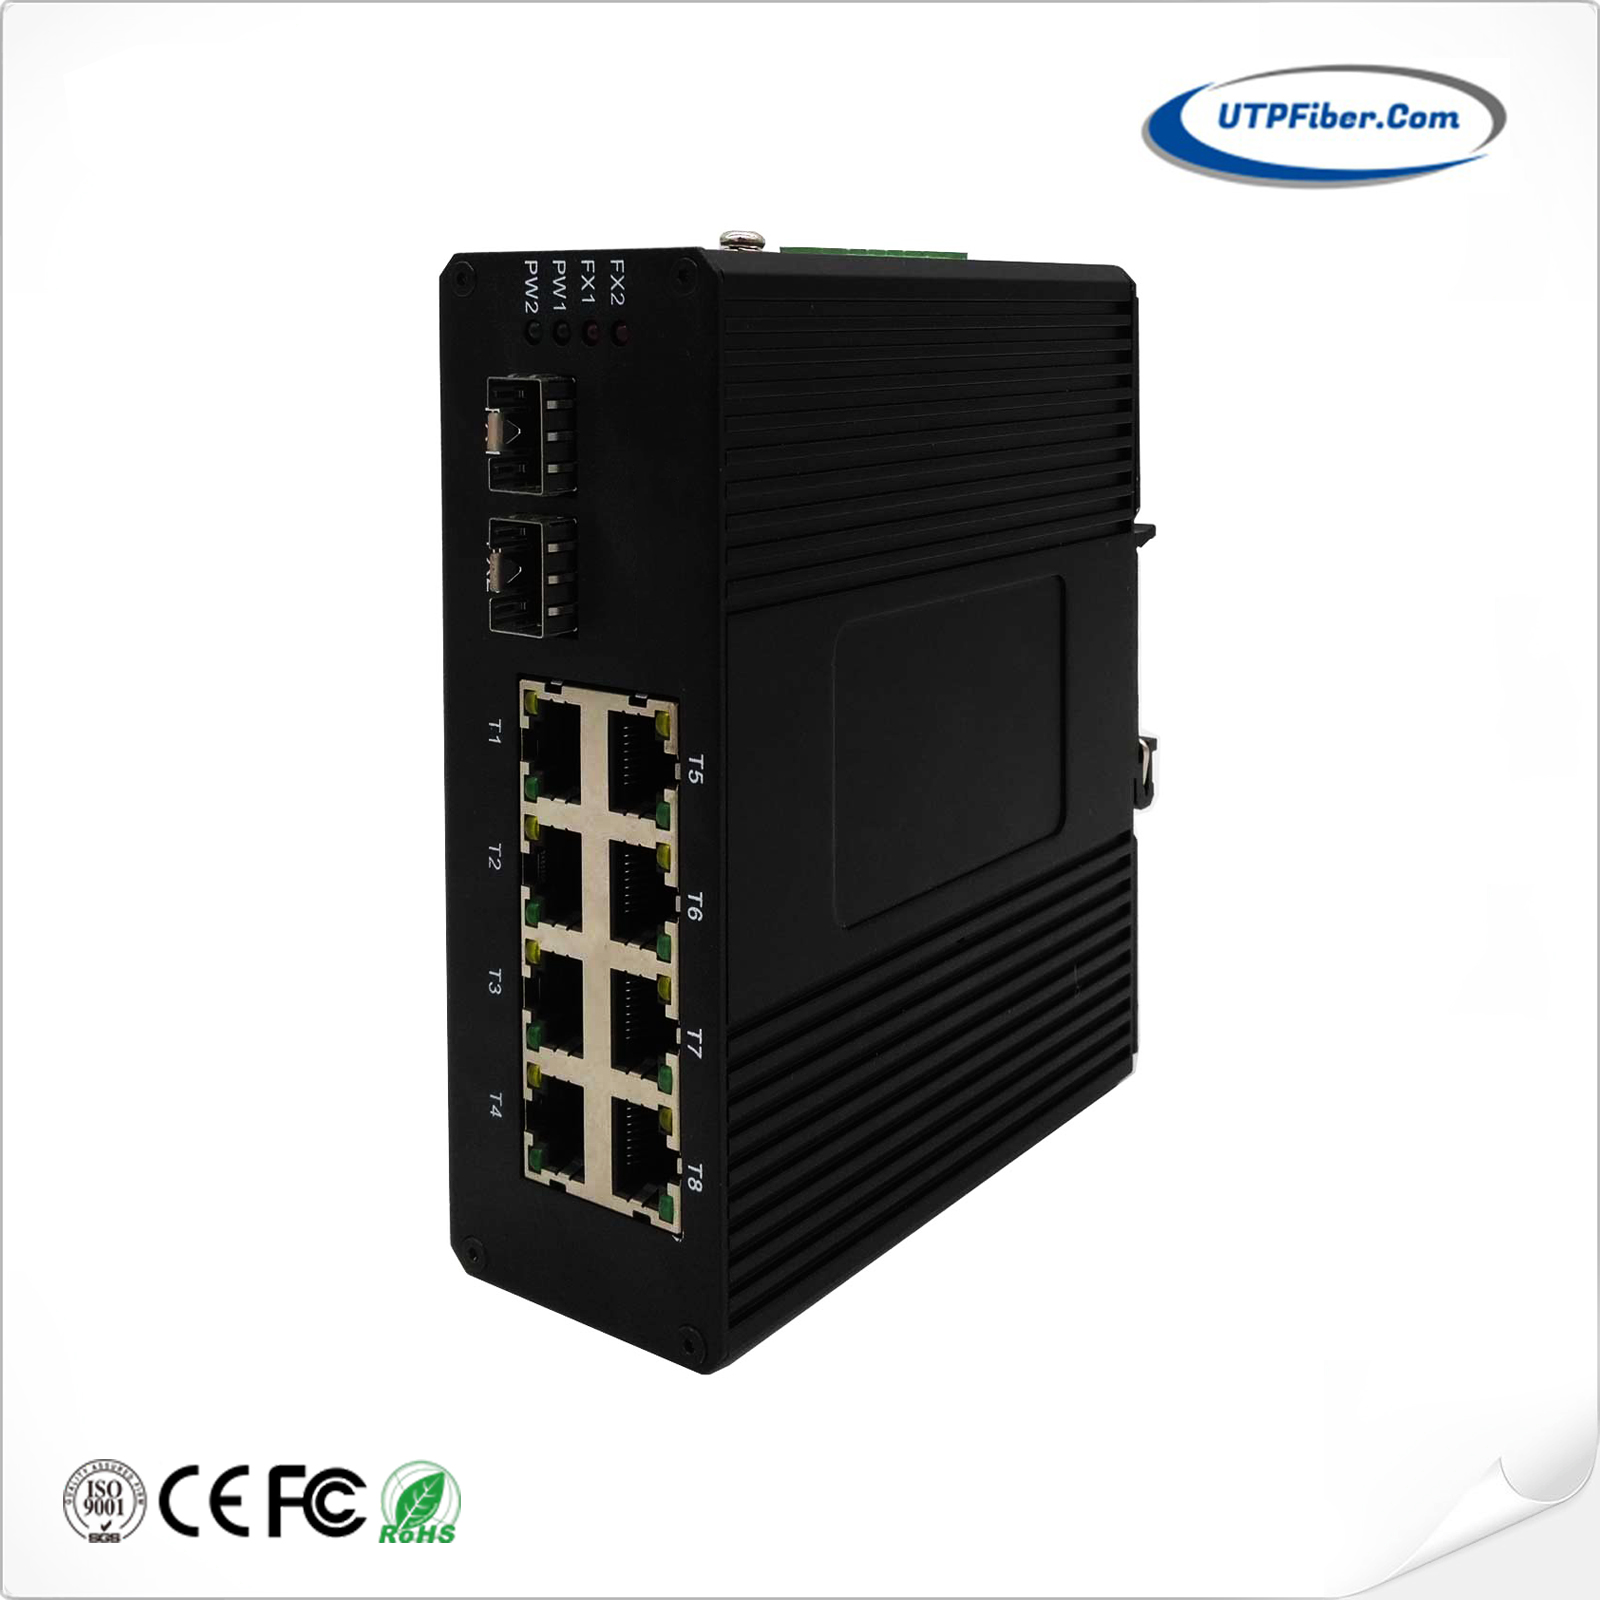 Unmanaged Industrial 8-Port 10/100/1000T 802.3at PoE + 2-Port 1000X Gigabit Ethernet Switch